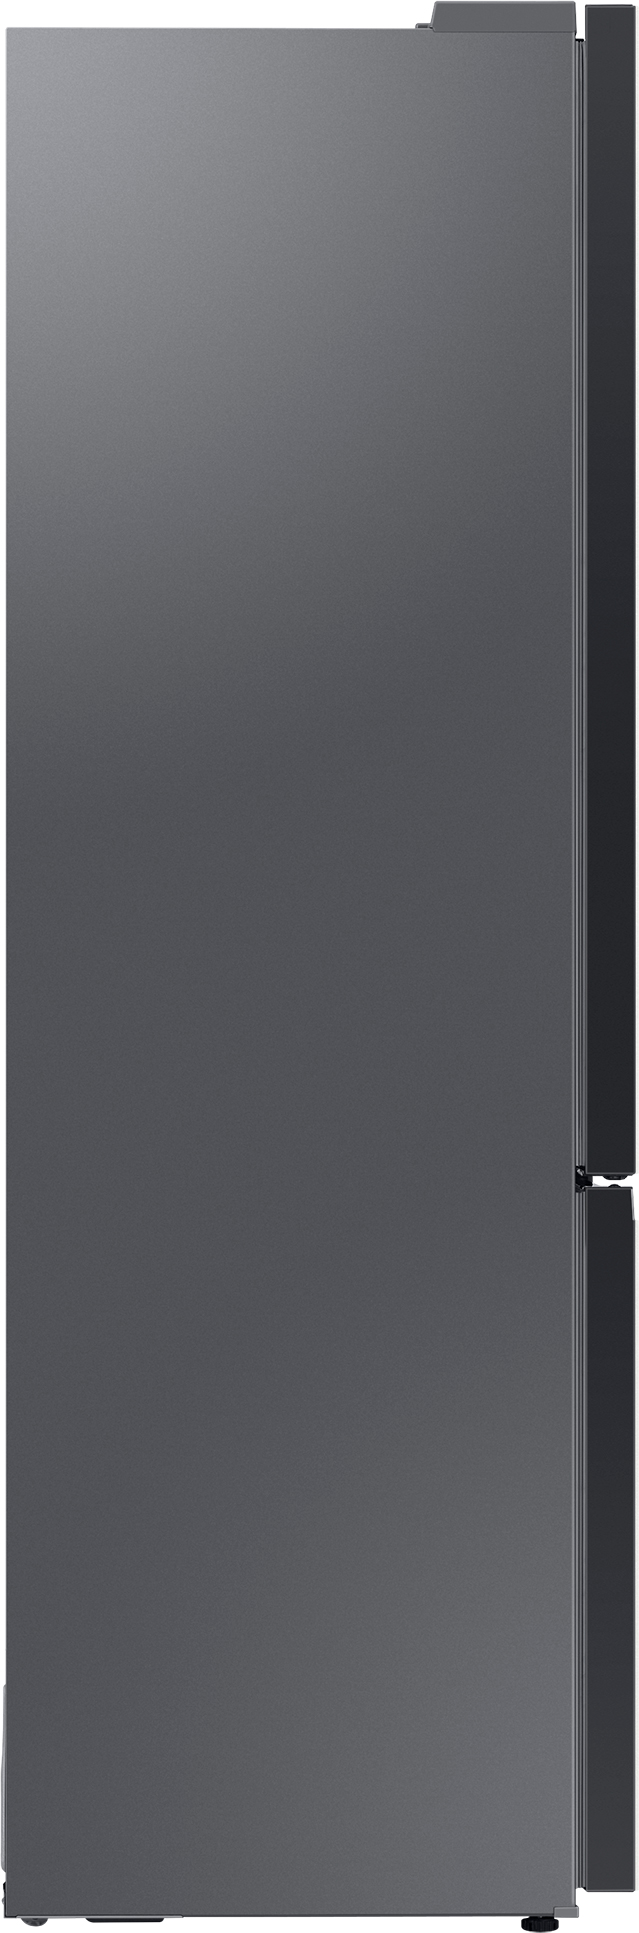 Холодильник Samsung RB38A6B6239/UA огляд - фото 11